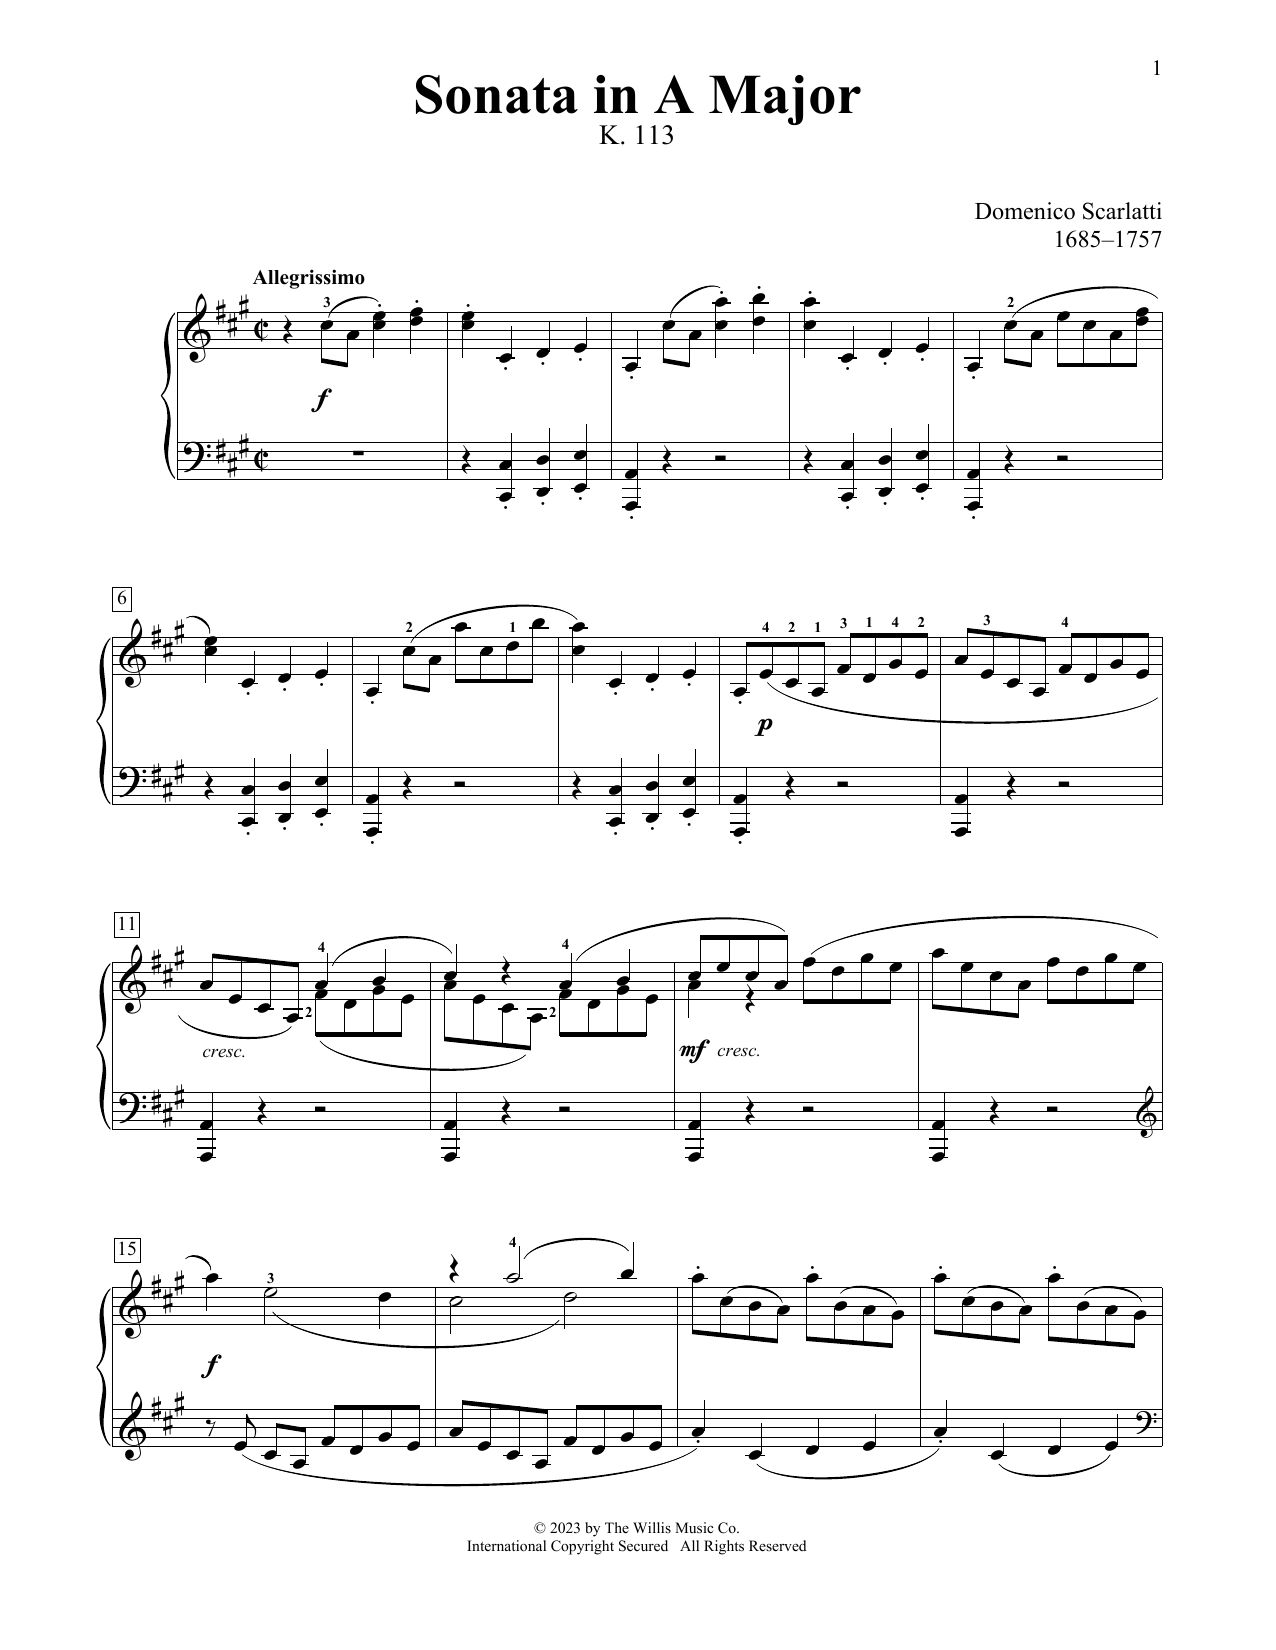 Domenico Scarlatti Sonata In A Major, K. 113 Sheet Music Notes & Chords for Educational Piano - Download or Print PDF